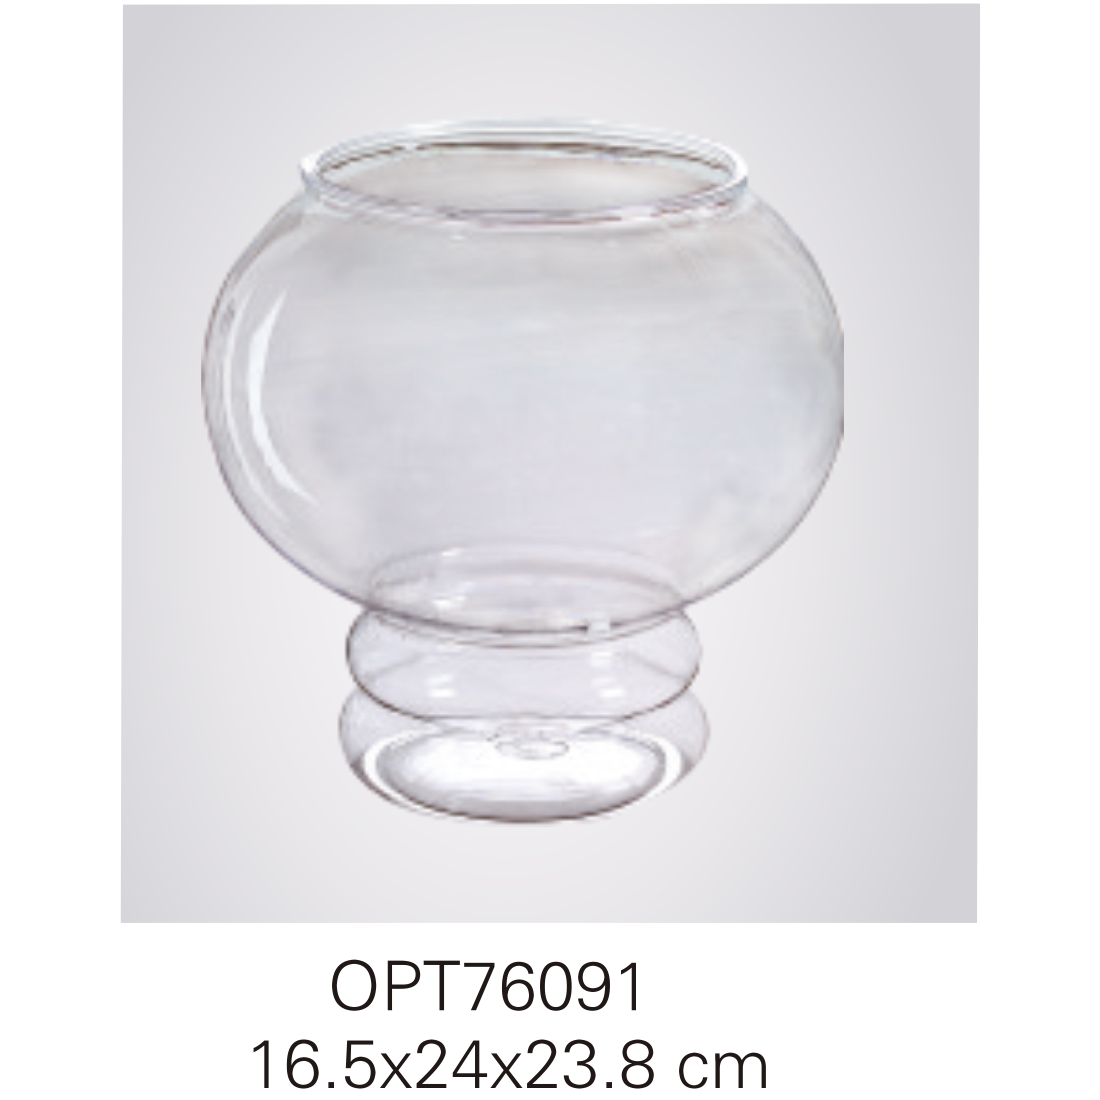 OPT76091 16.5x24x23.8cm fishbowls